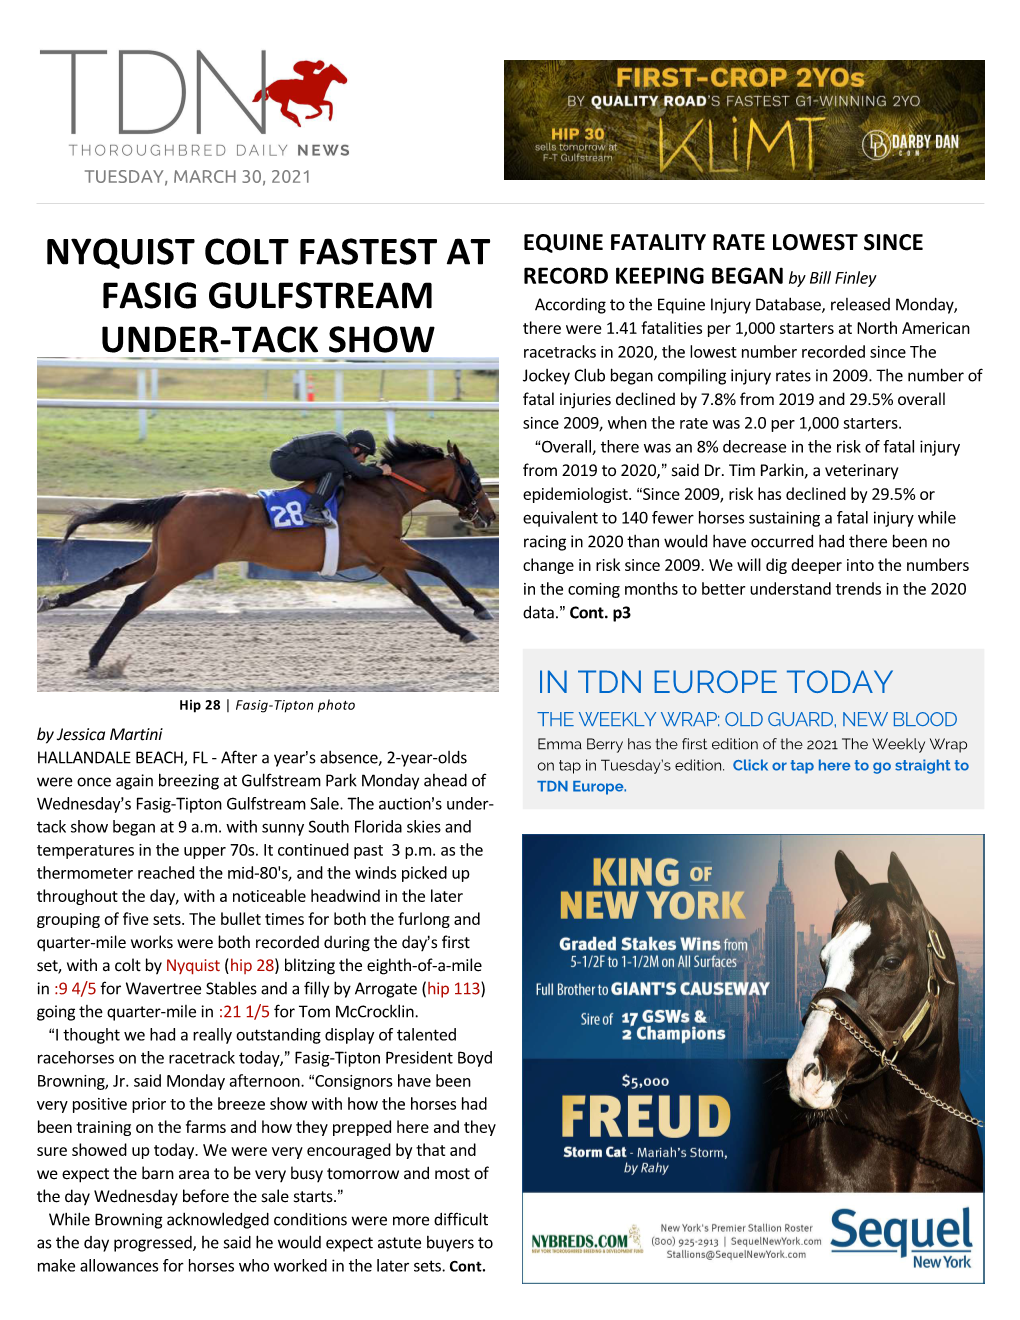 Nyquist Colt Fastest at Fasig Gulfstream Under-Tack Show